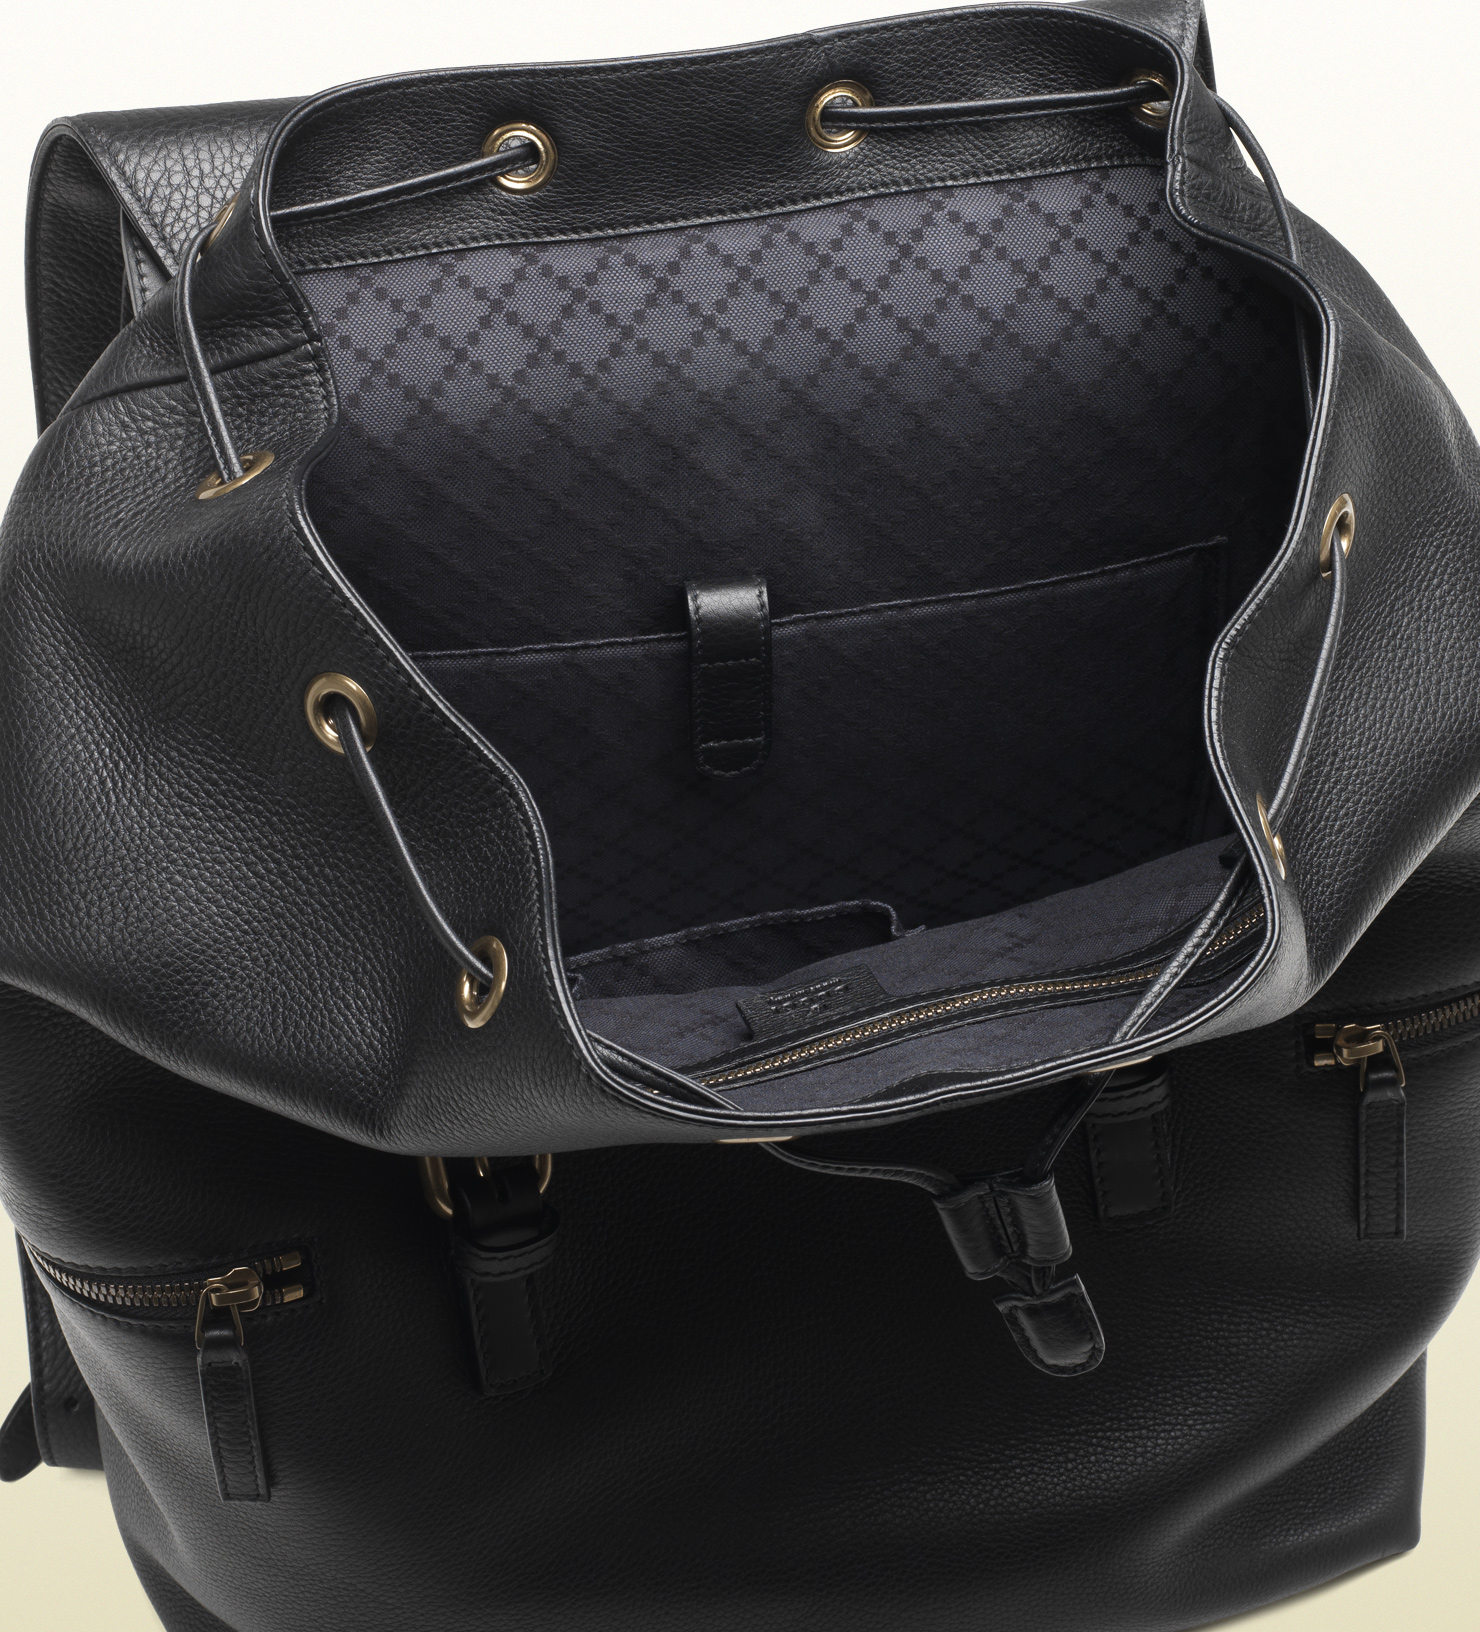 Lyst - Gucci Black Leather Backpack in Black for Men